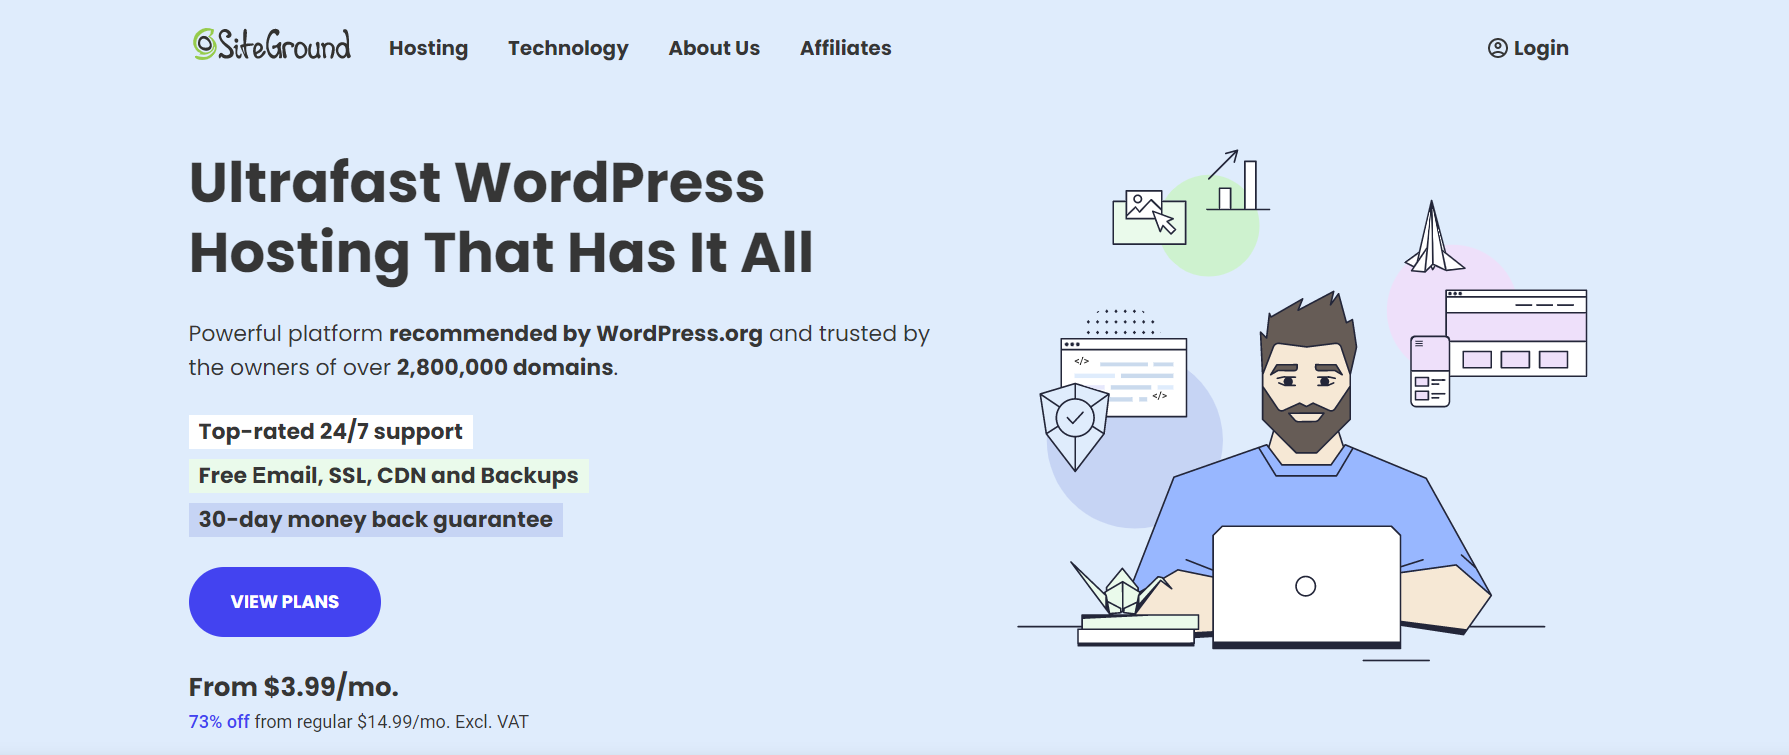 Best Wordpress Hosting Provider 5